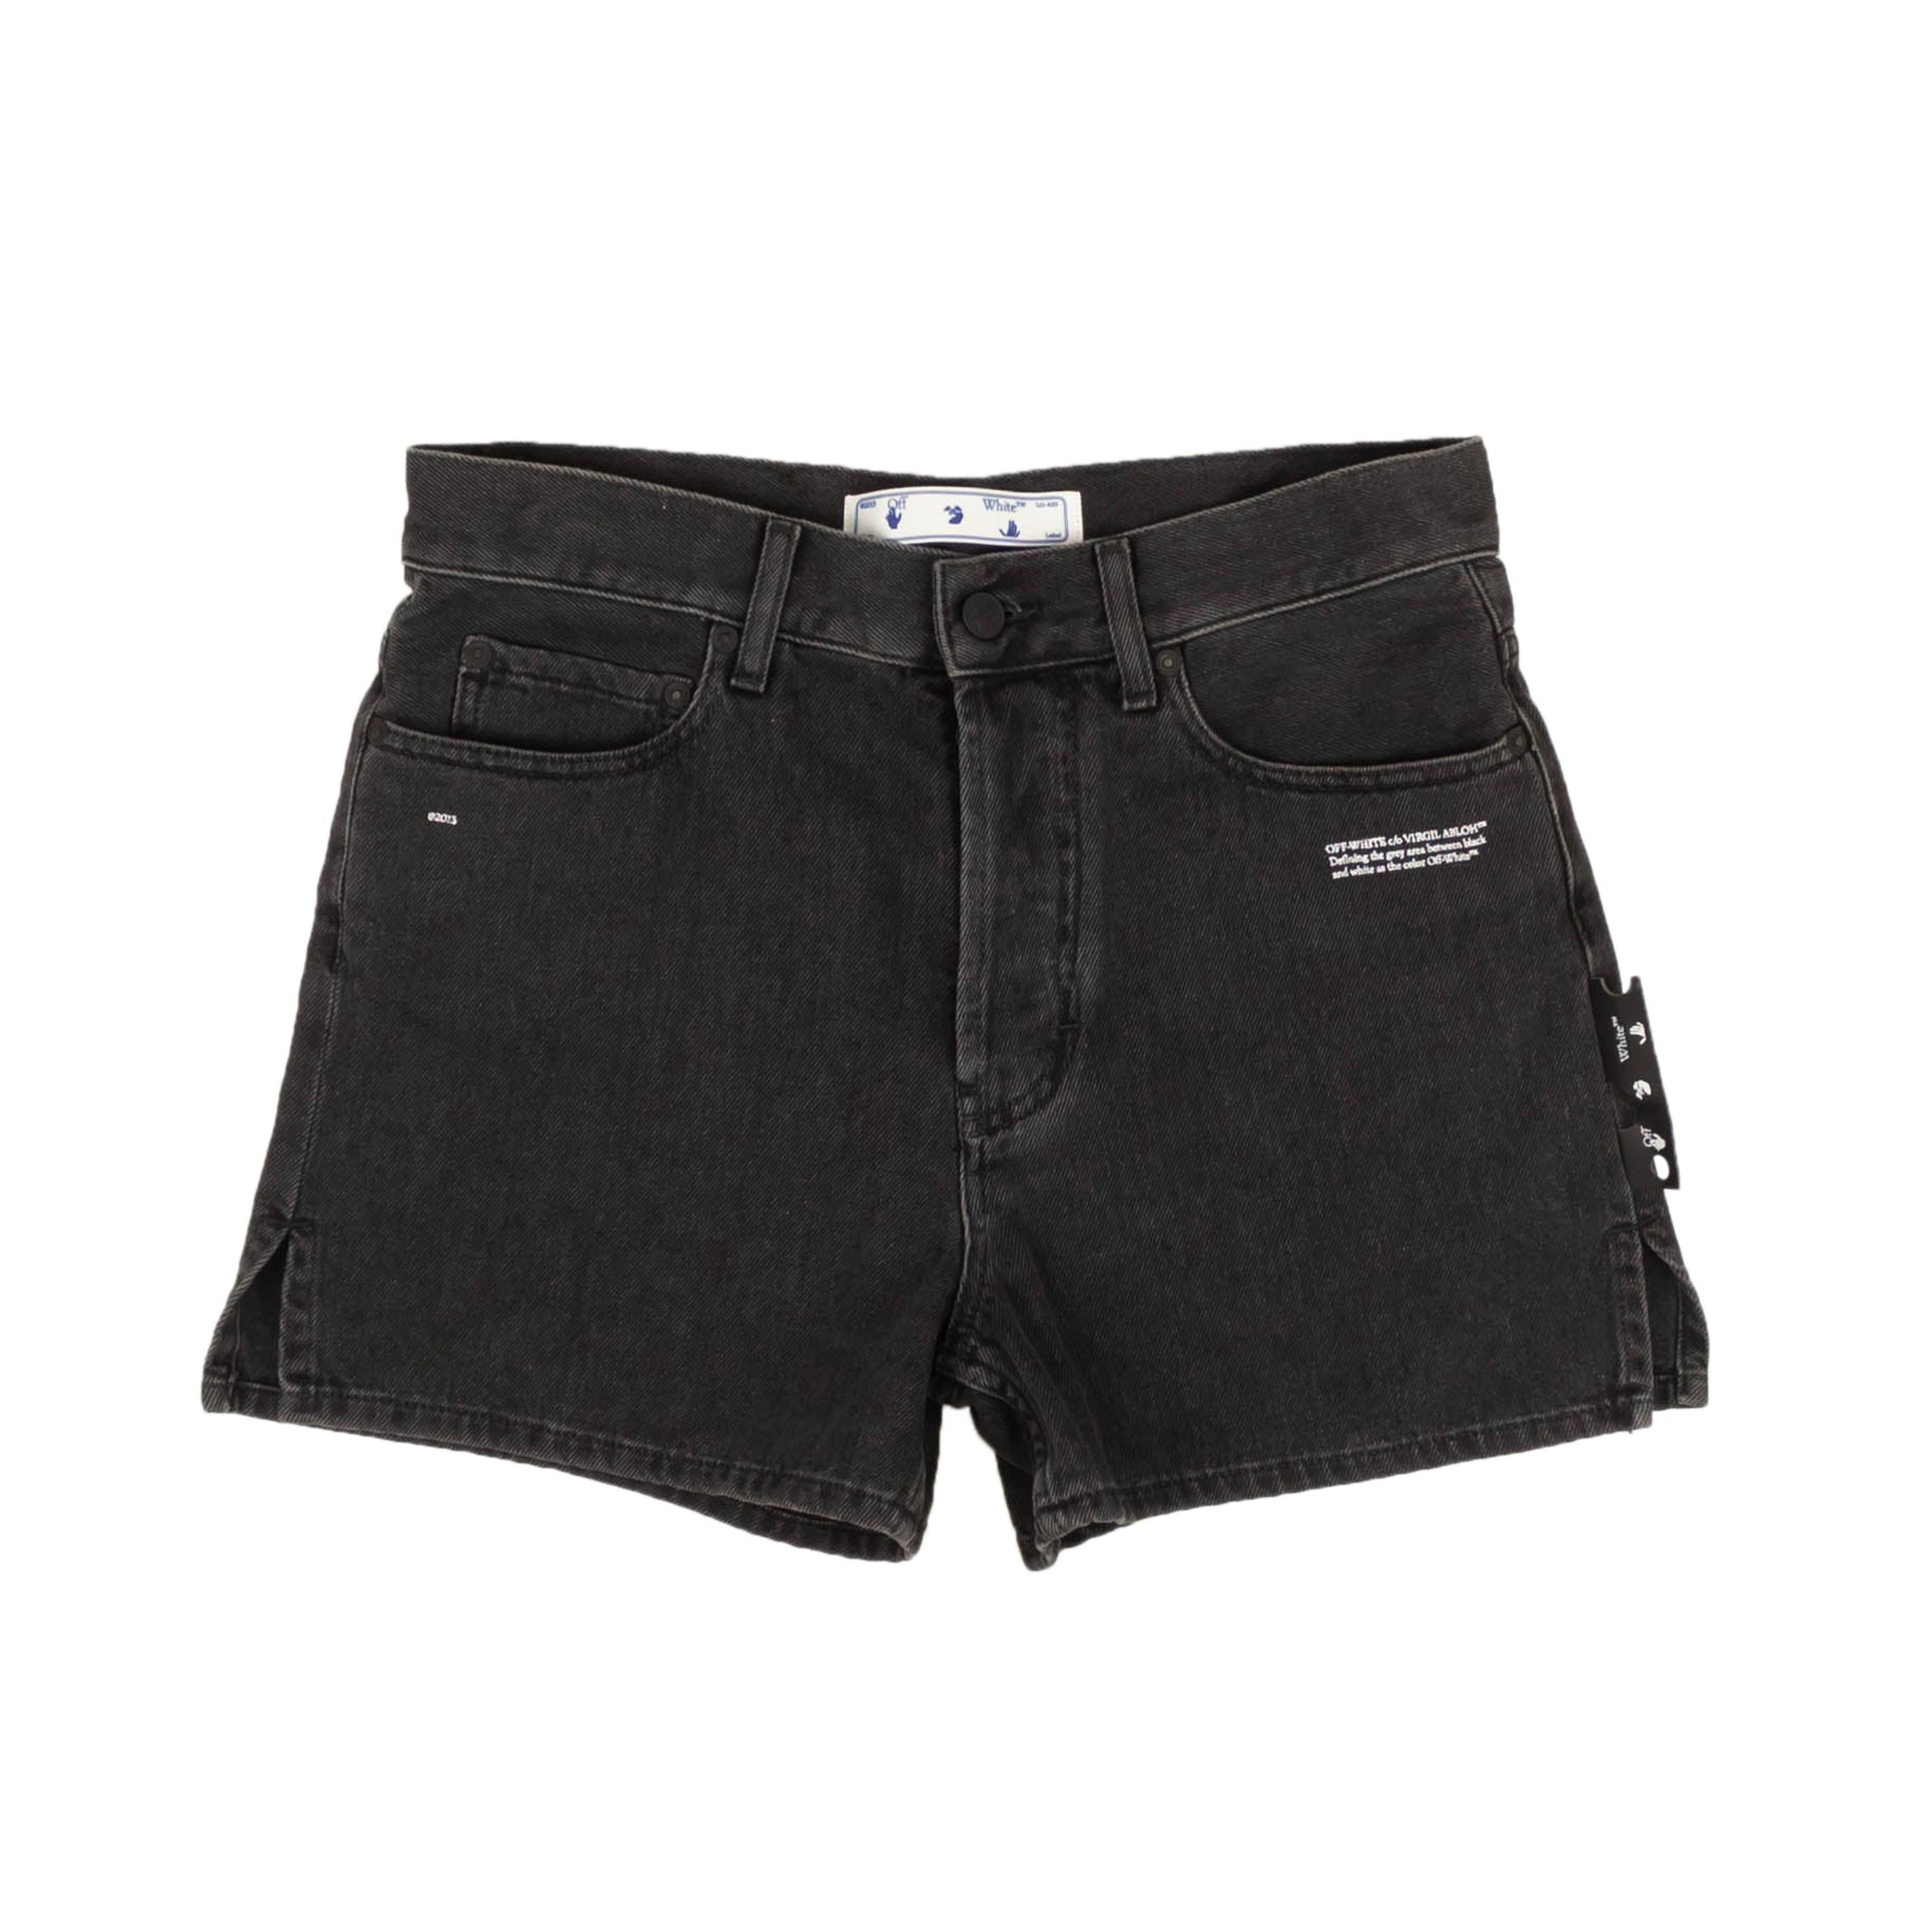 Black New Denim Jean Shorts